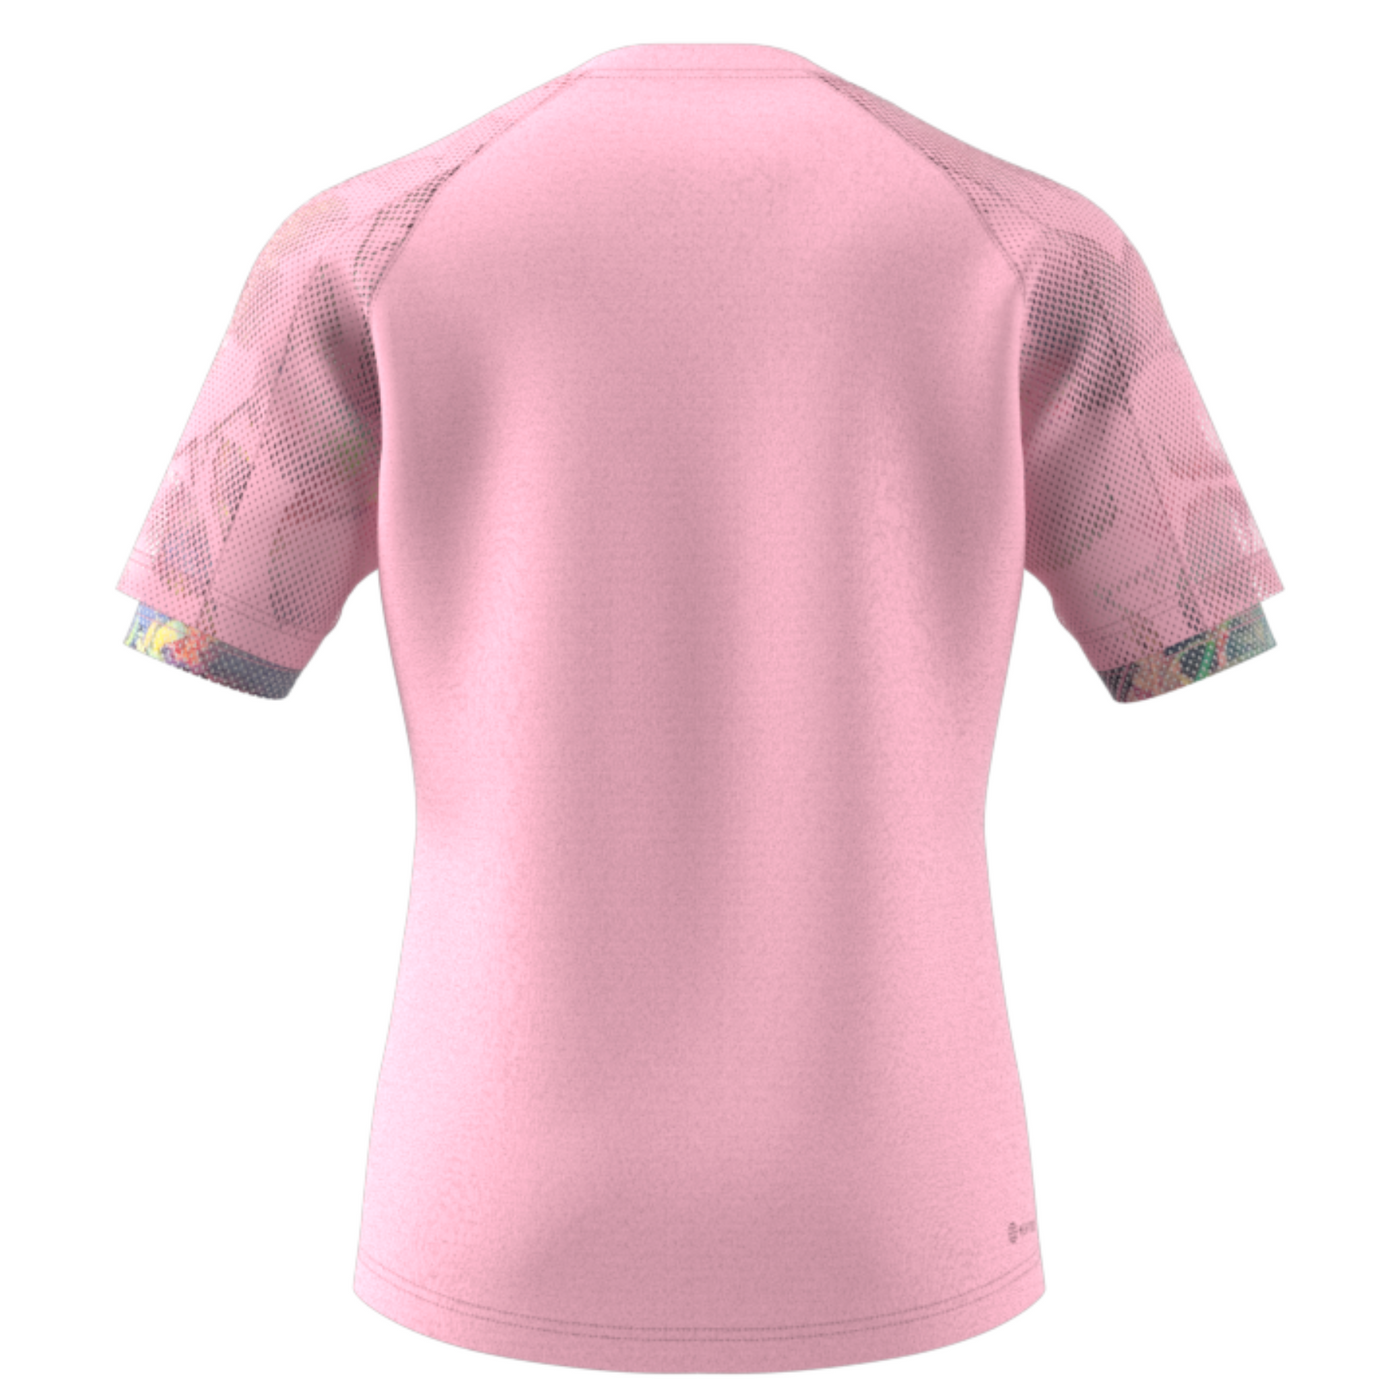 Adidas Performance MEL RAGLAN Tennis Shirt - Clear Pink